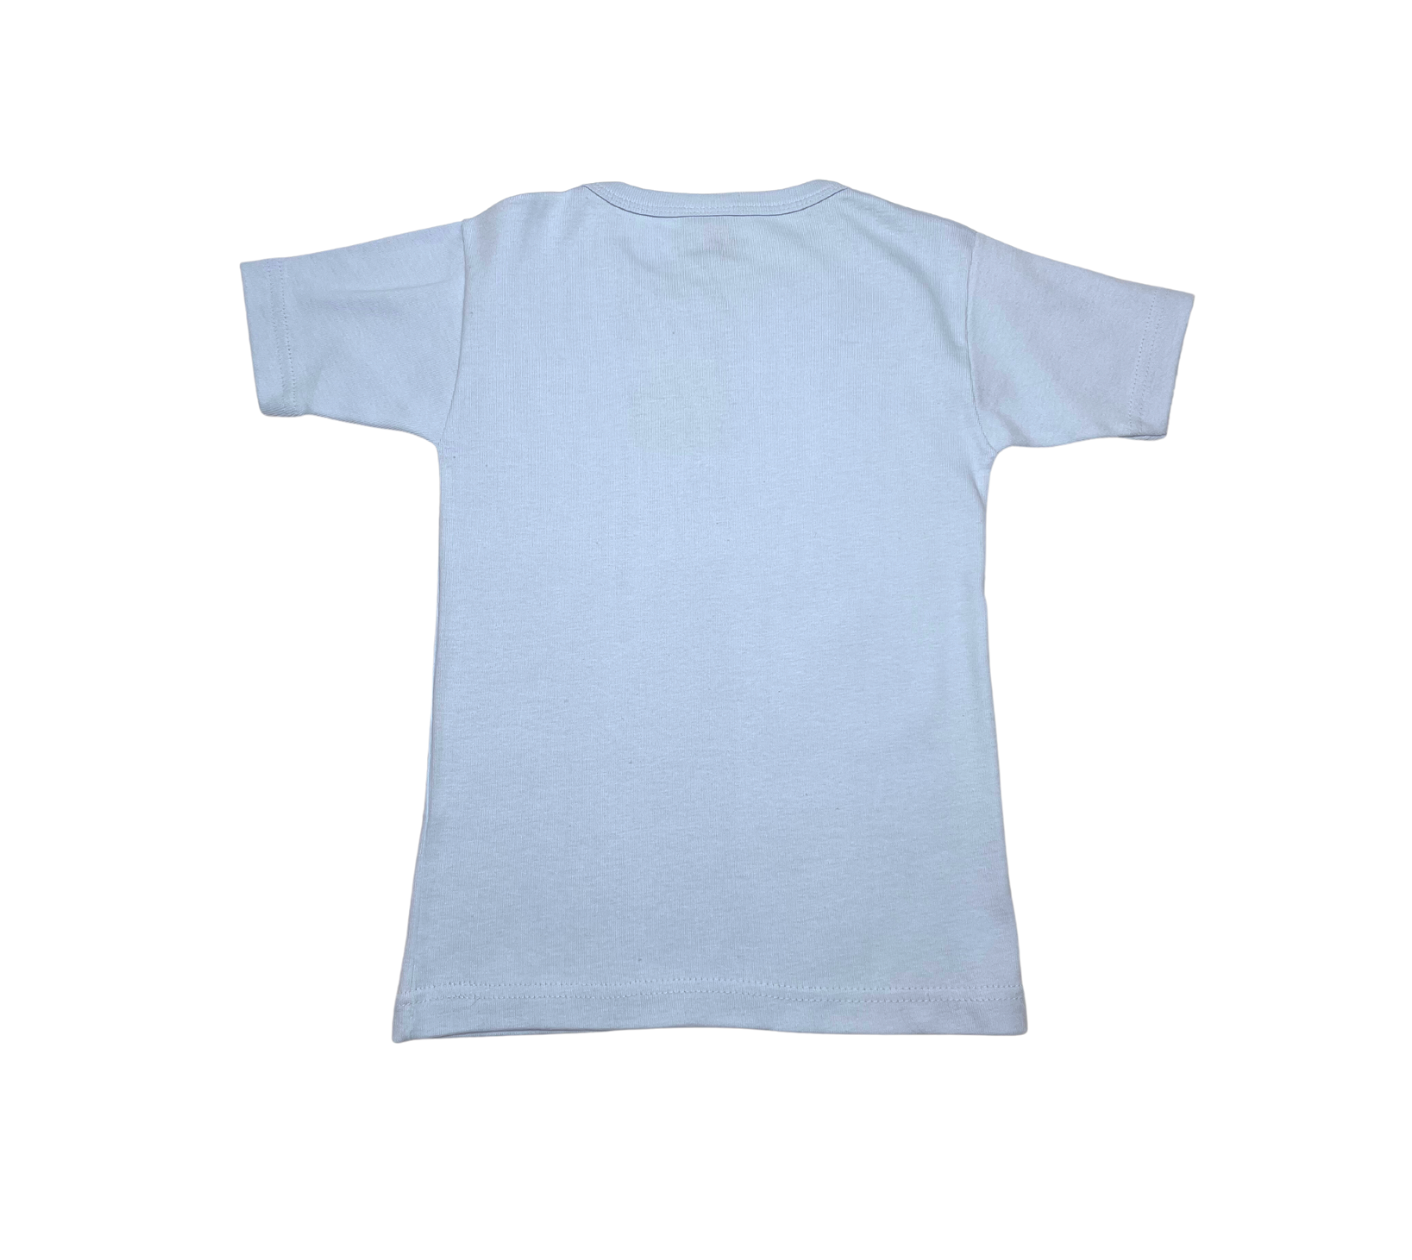 VINTAGE - T-shirt bleu clair Babar - 7/8 ans